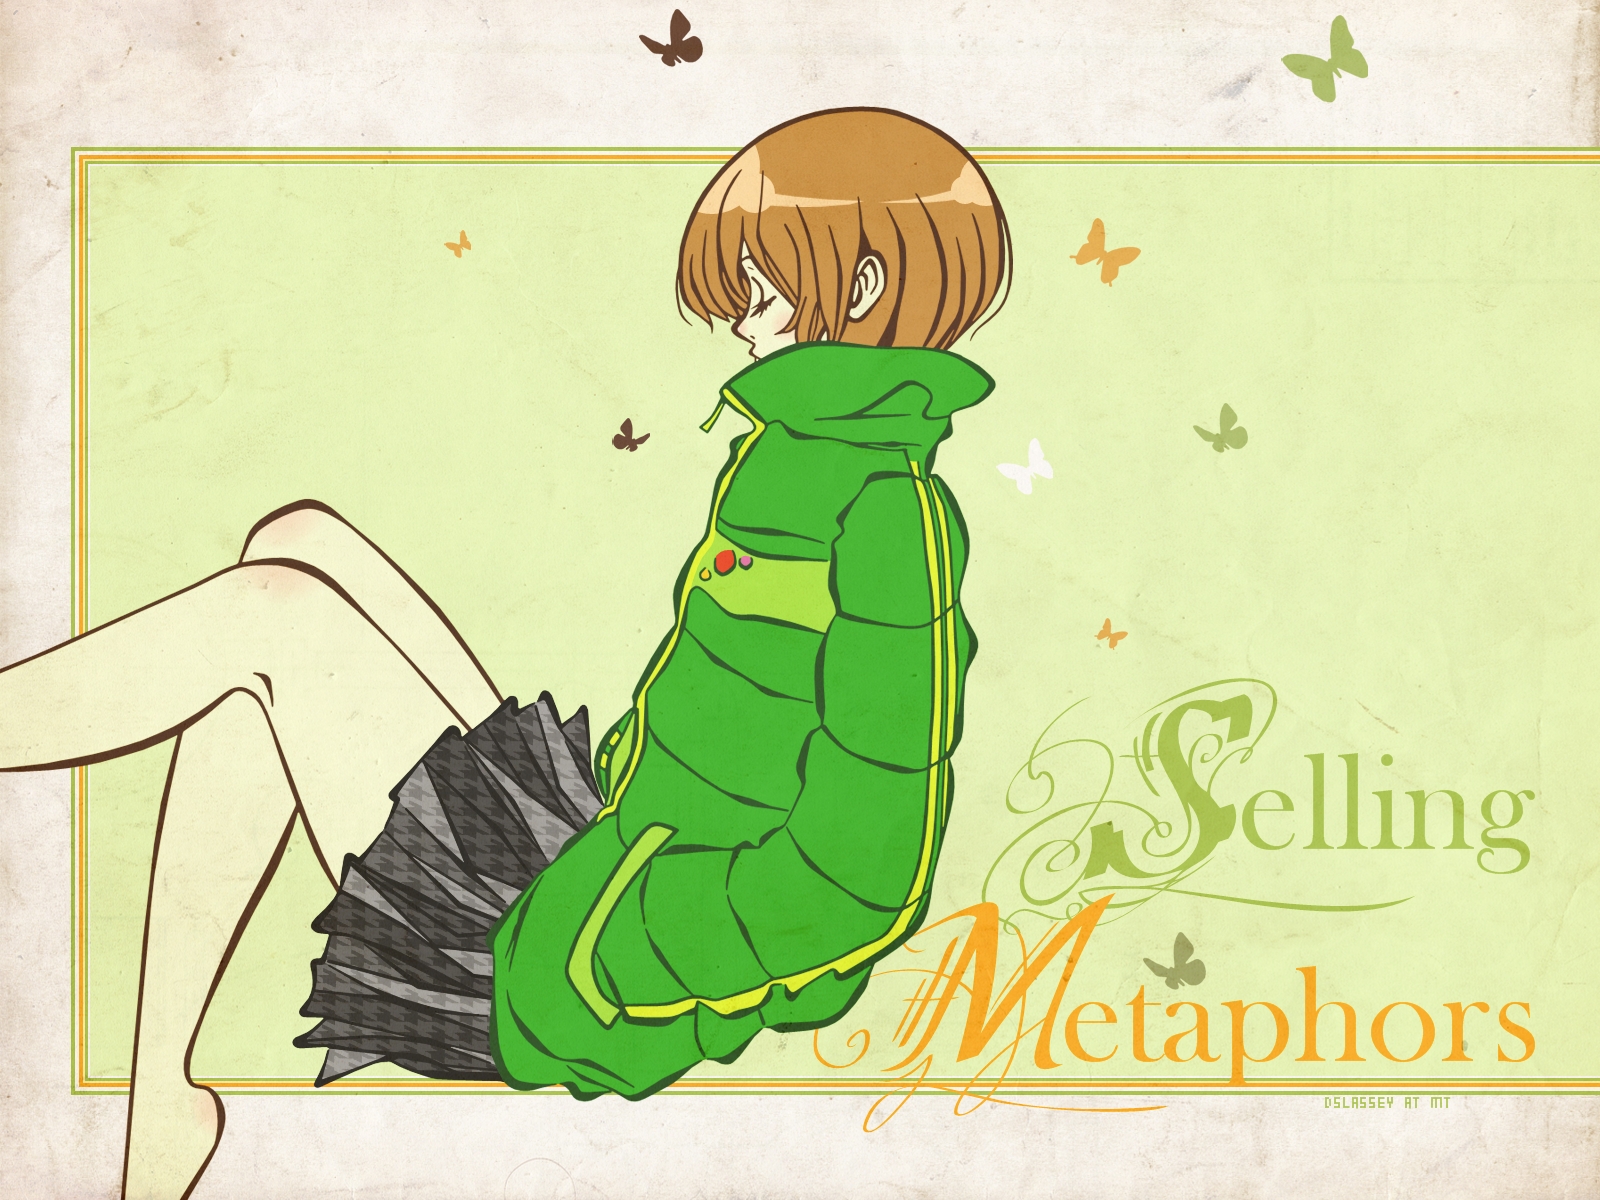 Shin Megami Tensei Persona Wallpaper Selling Metaphors Minitokyo